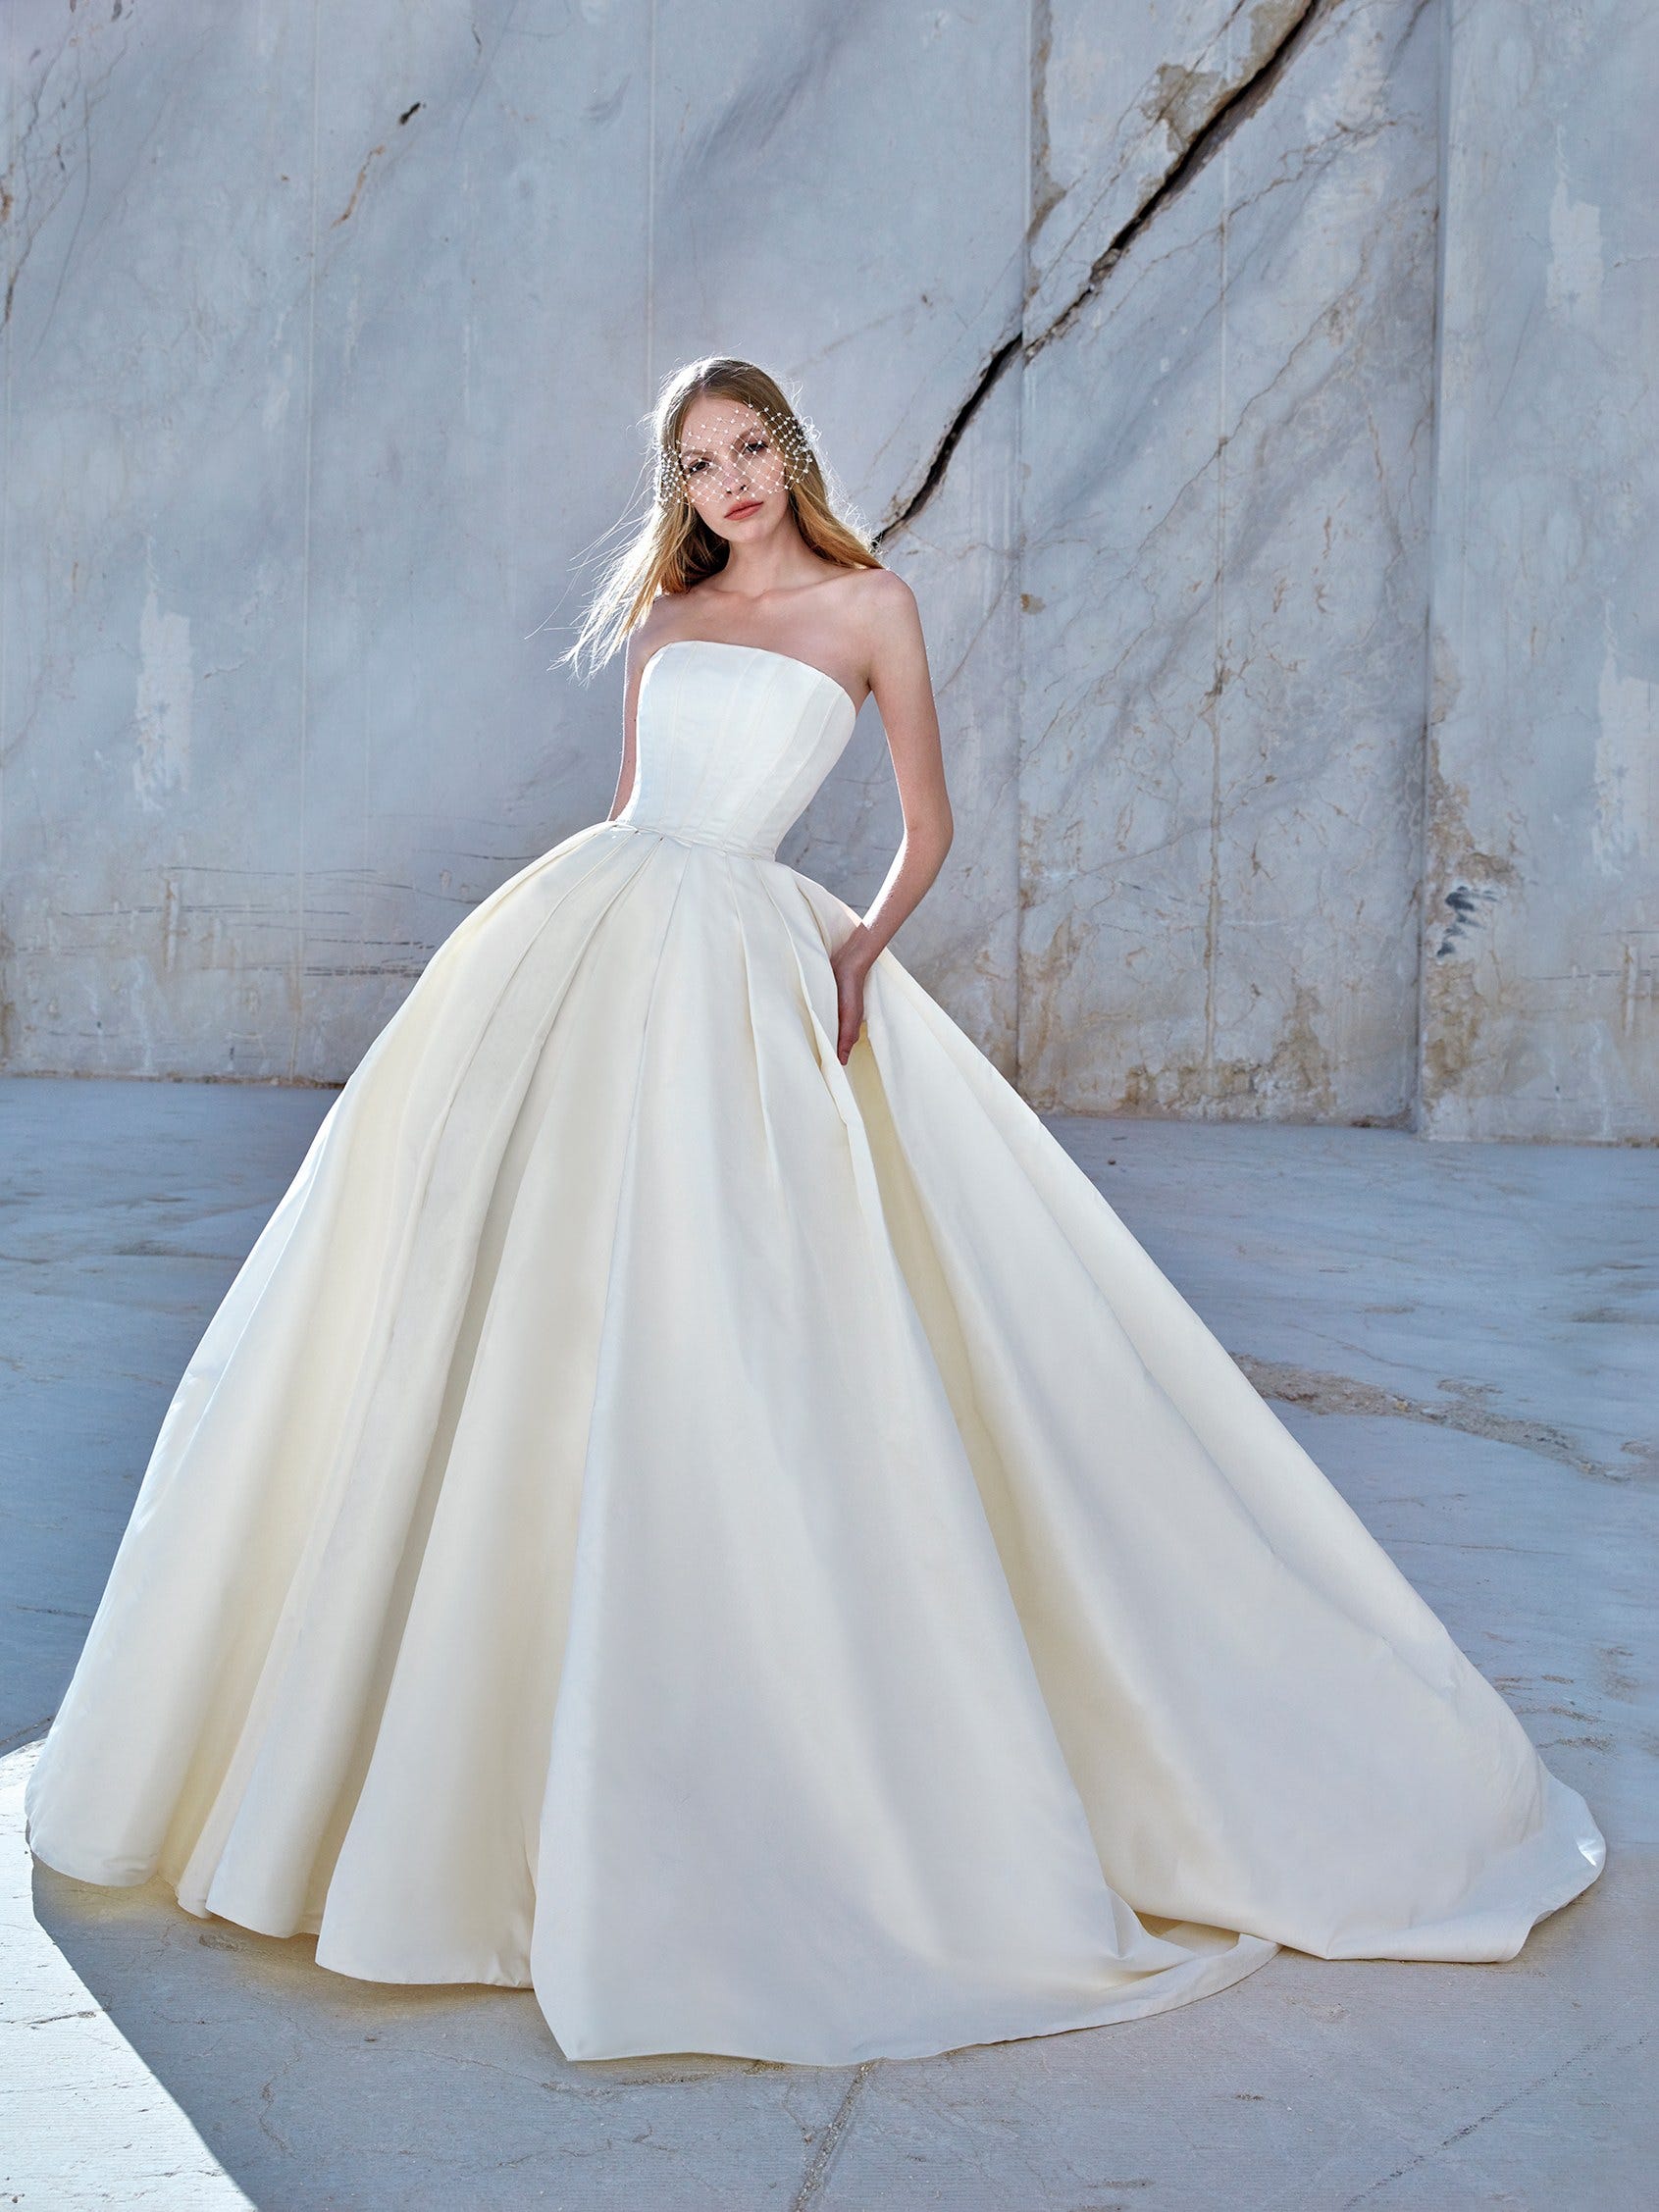 Crystal Design 2017 Wedding Dresses — Haute Couture Bridal Collection |  Wedding Inspirasi | Wedding dresses lace ballgown, Wedding dresses taffeta,  Perfect wedding dress